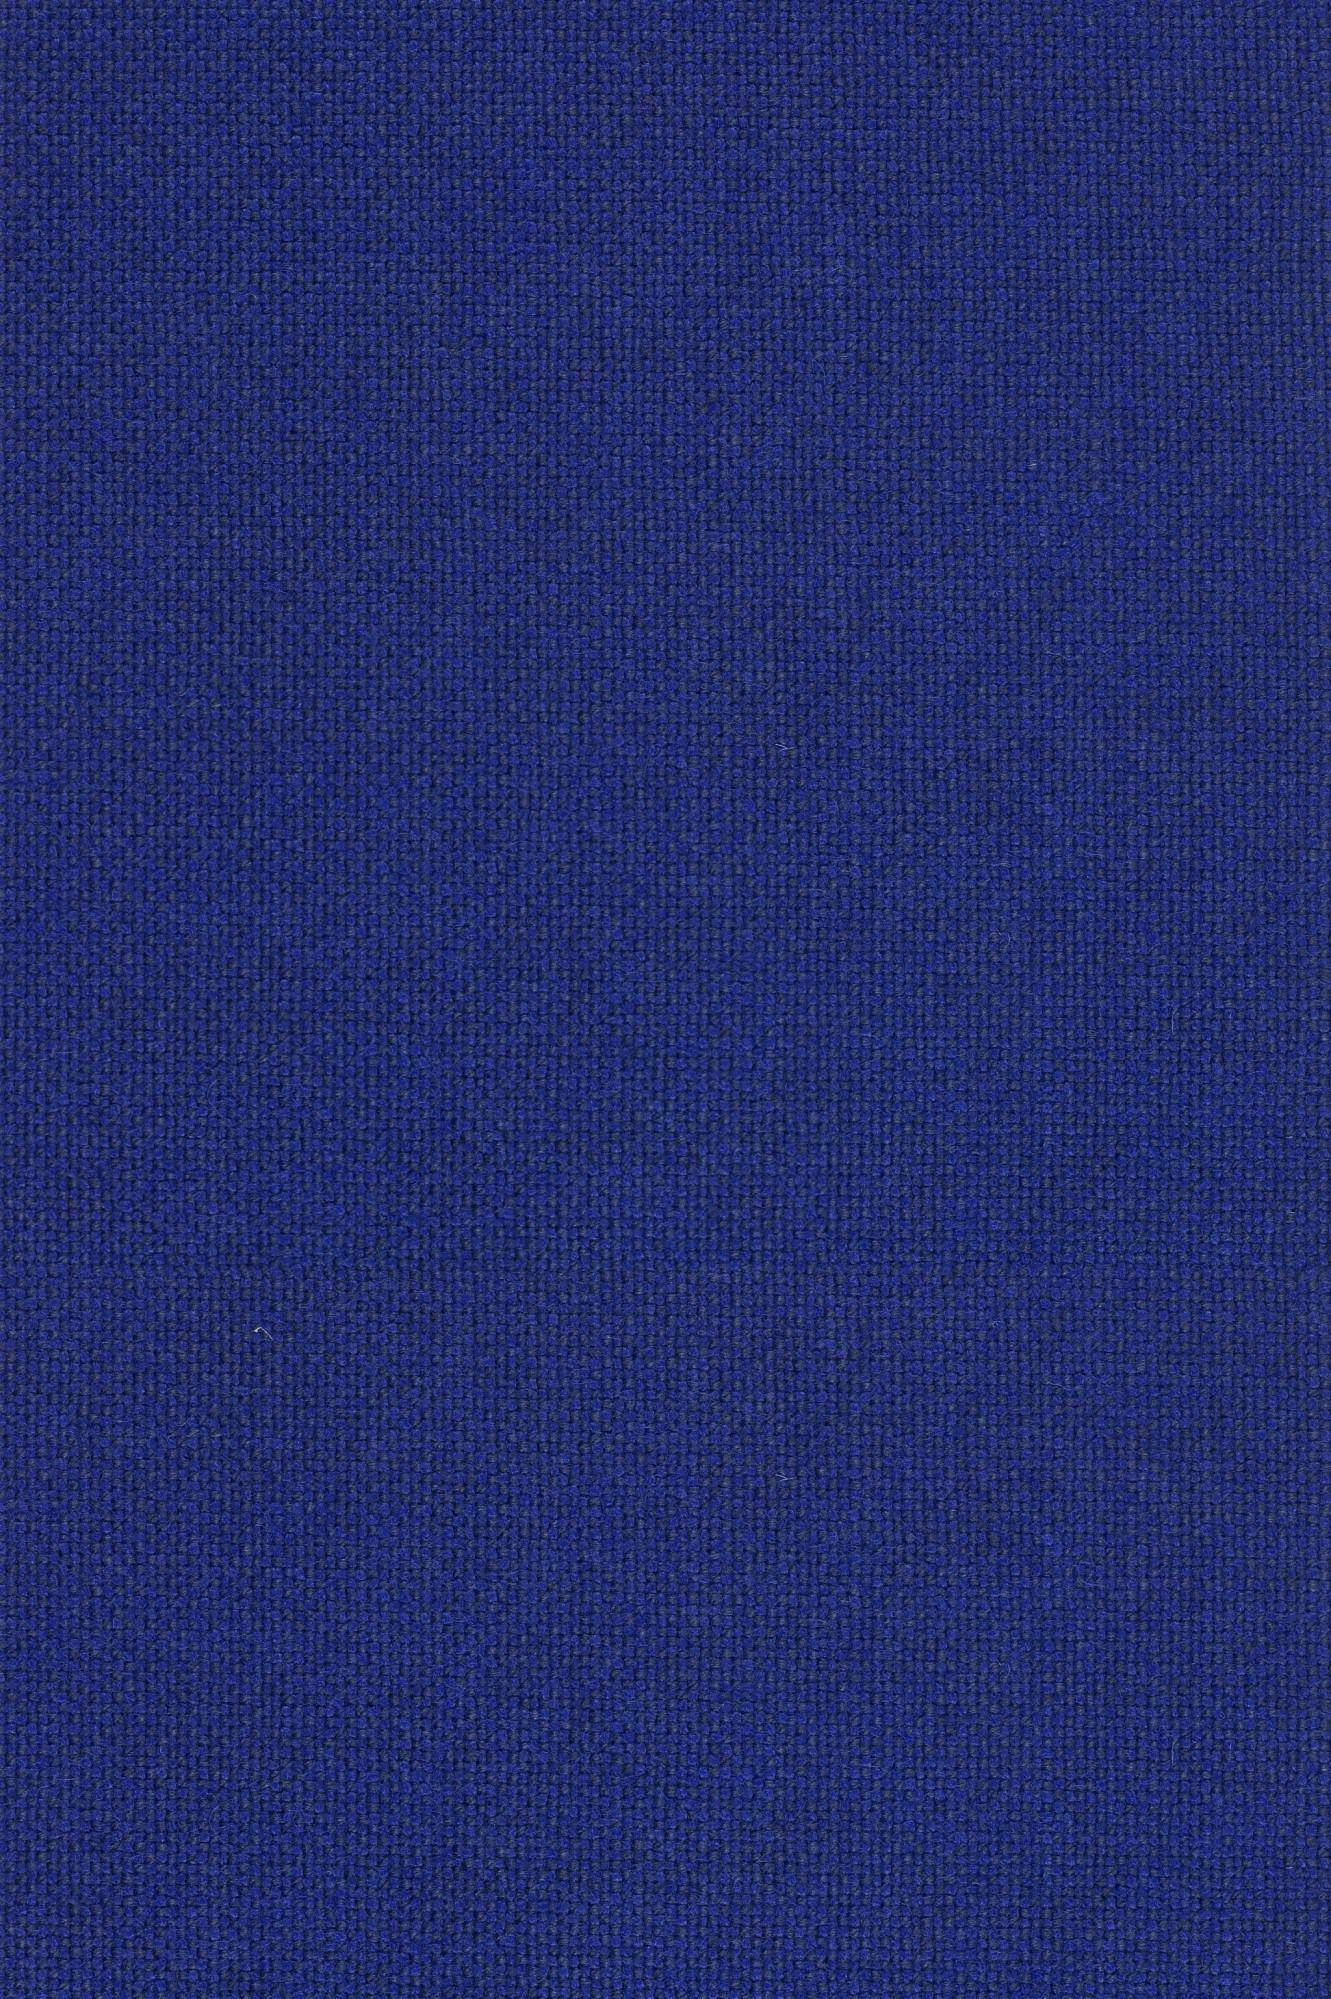 Fabric sample Hallingdal 65 773 blue